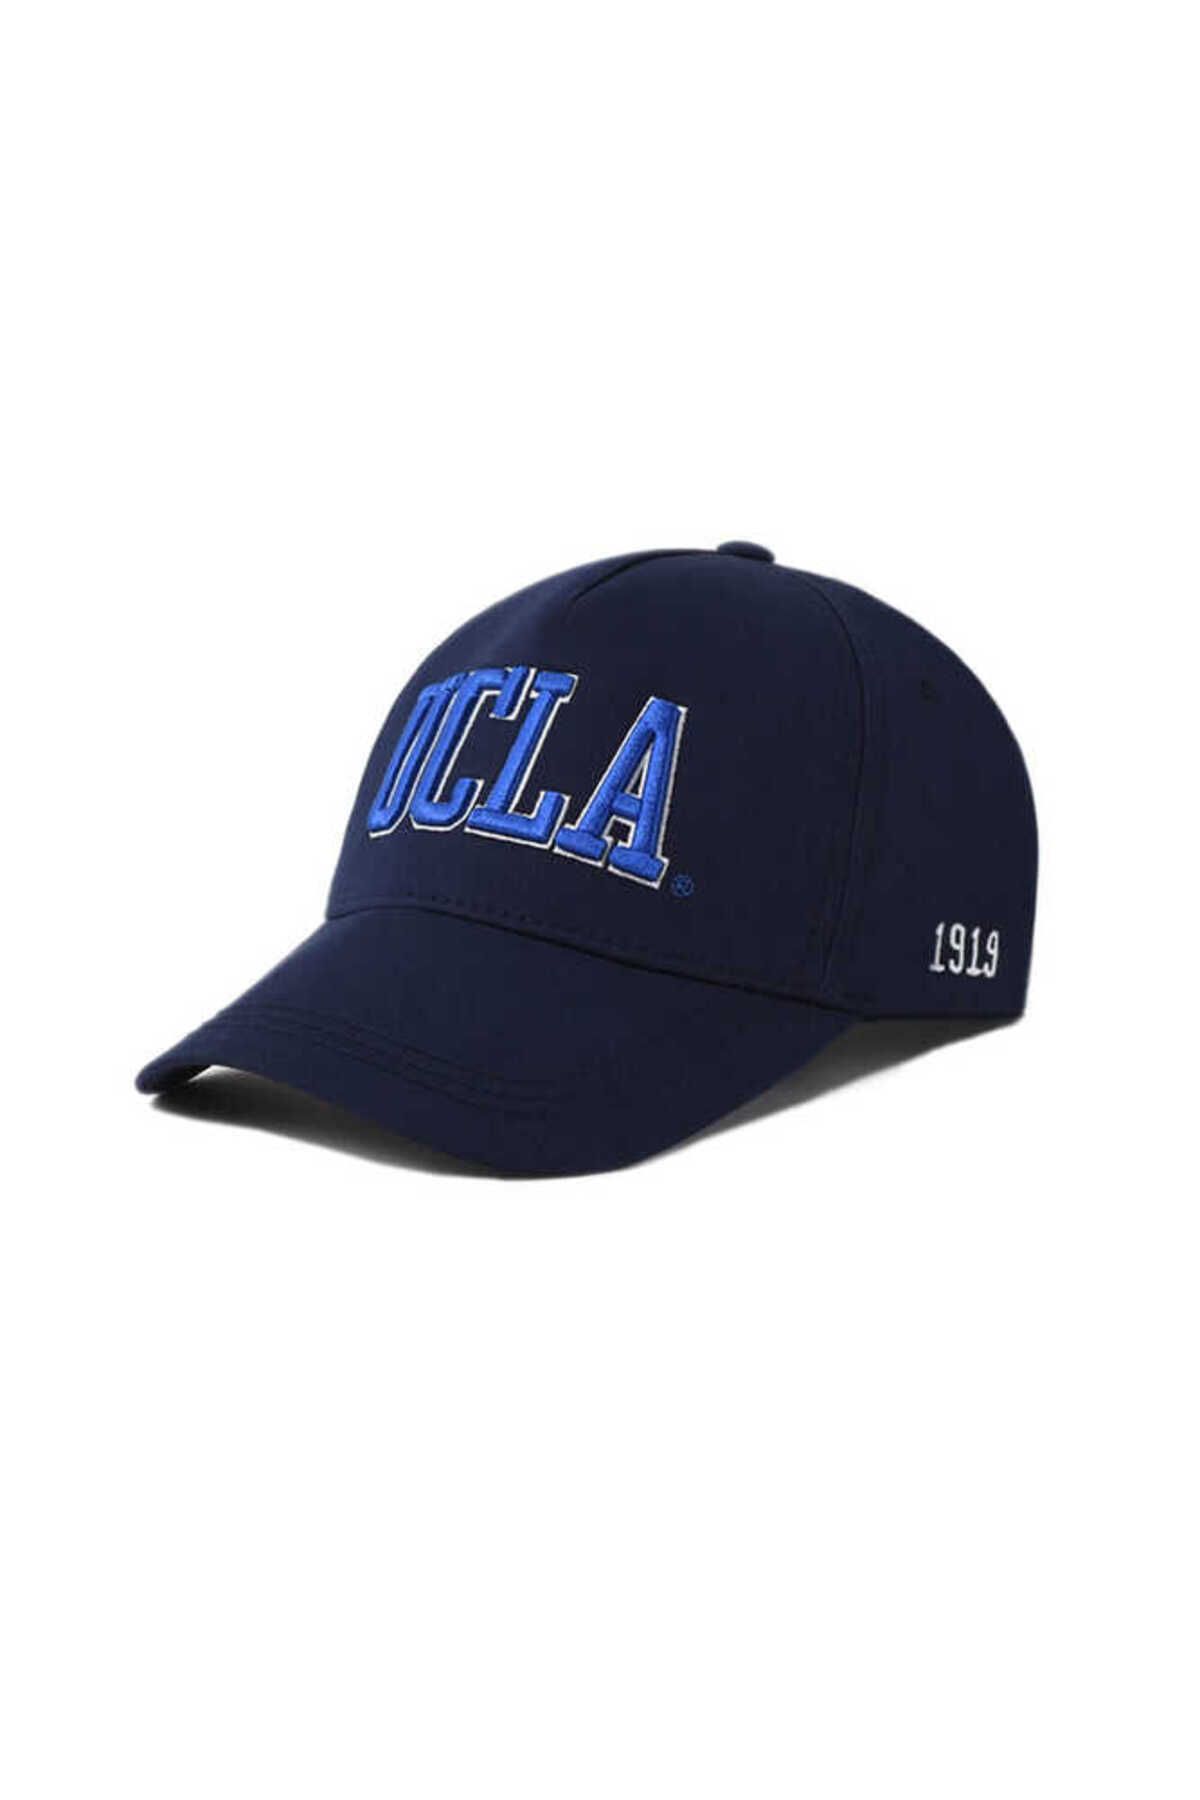 Ucla Ranch Lacivert Mavi Baseball Cap Nakışlı Unisex Şapka